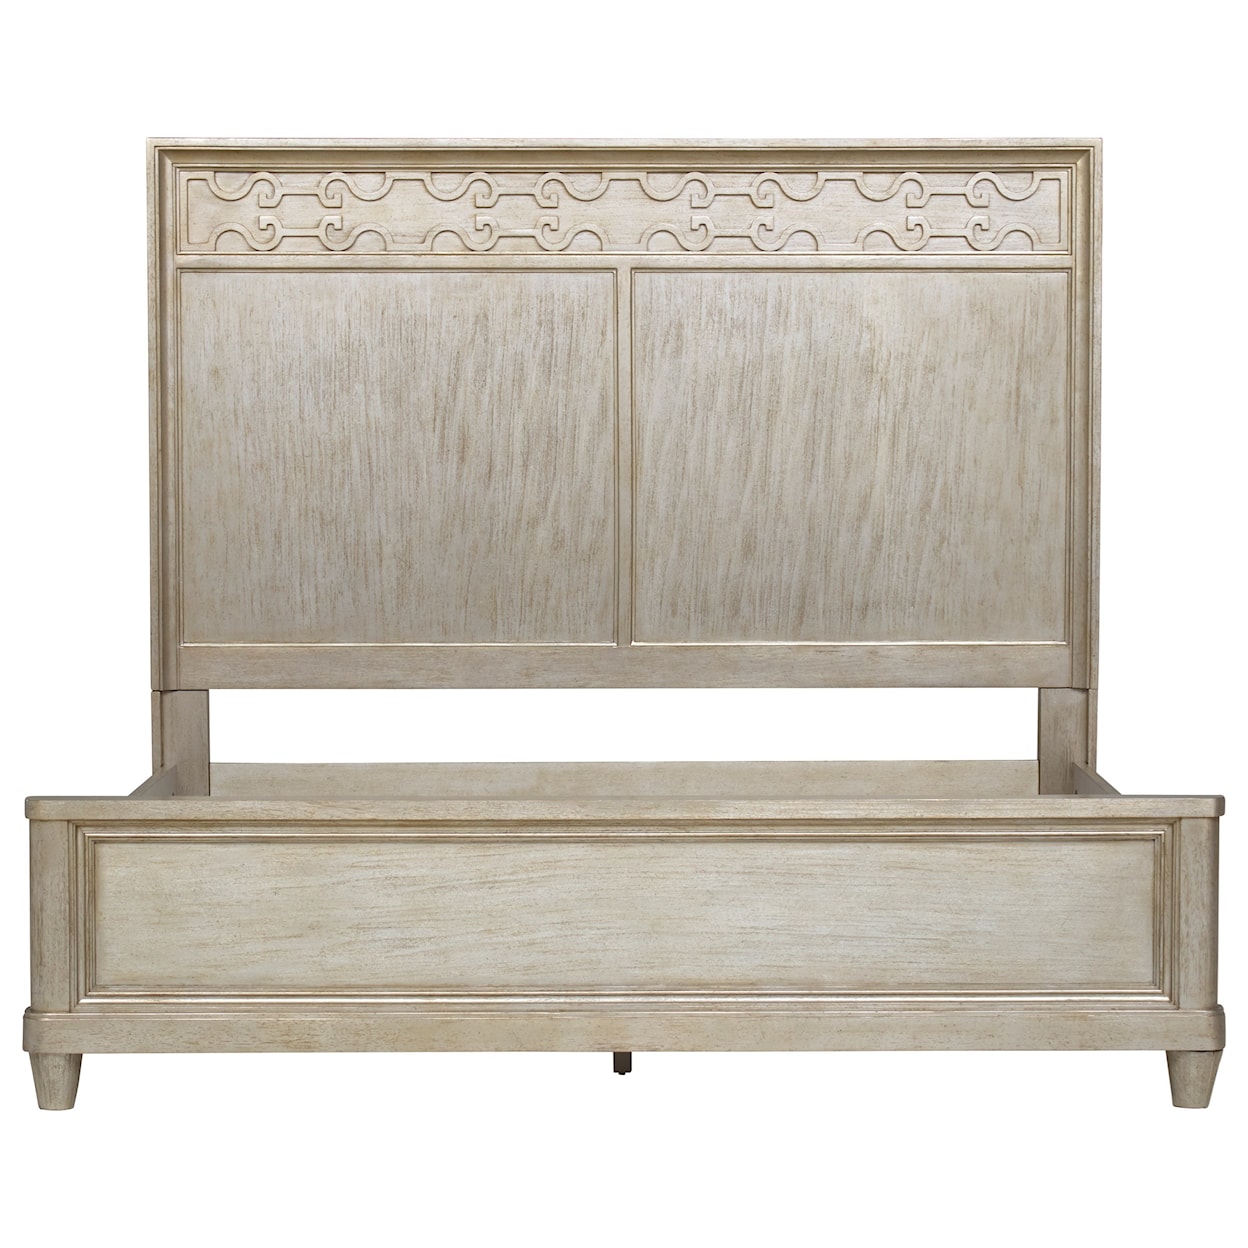 A.R.T. Furniture Inc Morrissey California King Cashin Panel Bed 